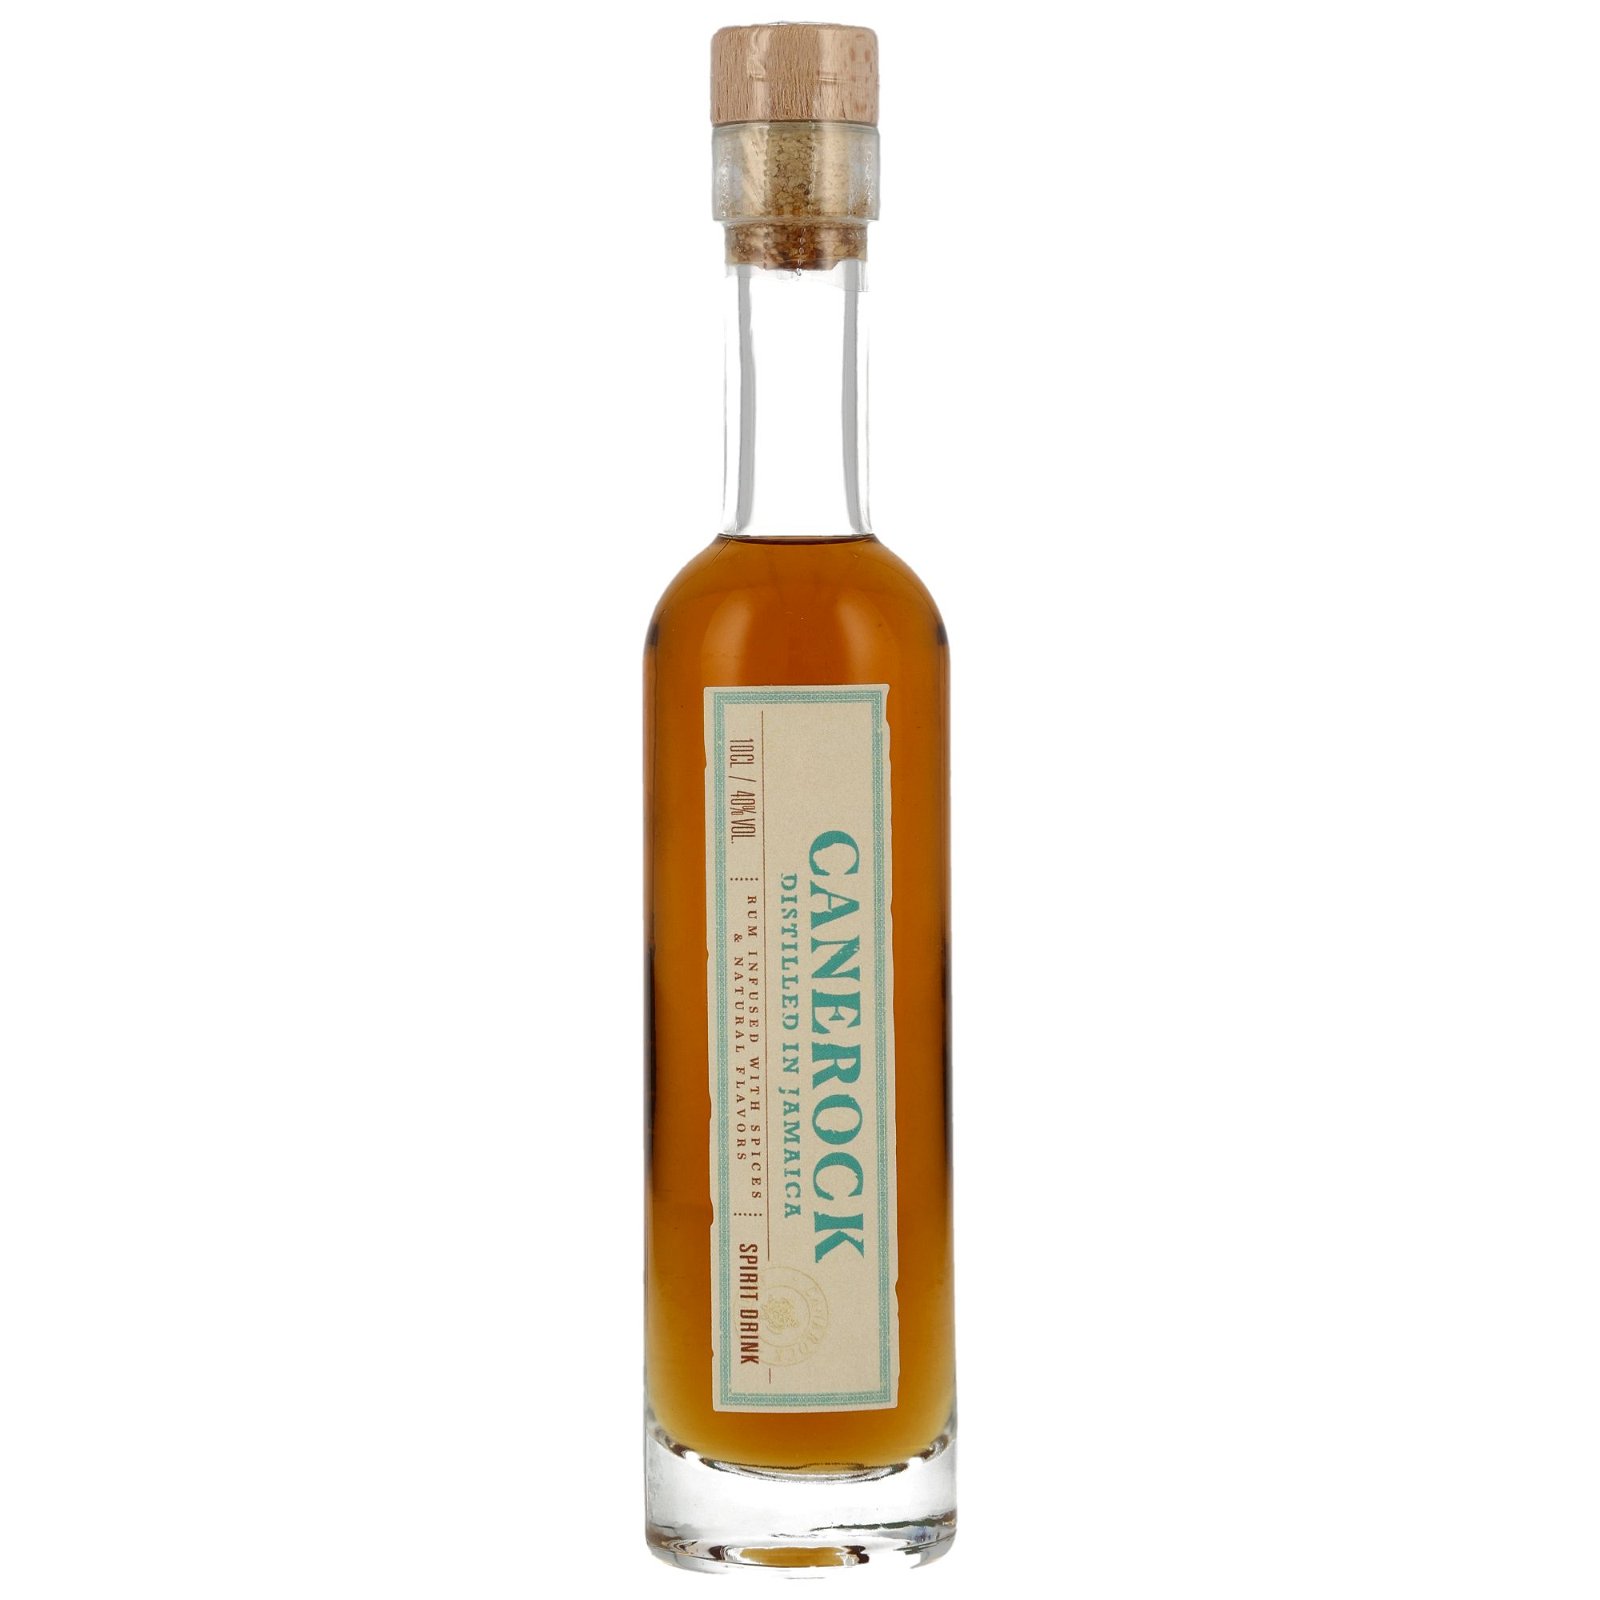 Canerock Spiced Rum (100ml)